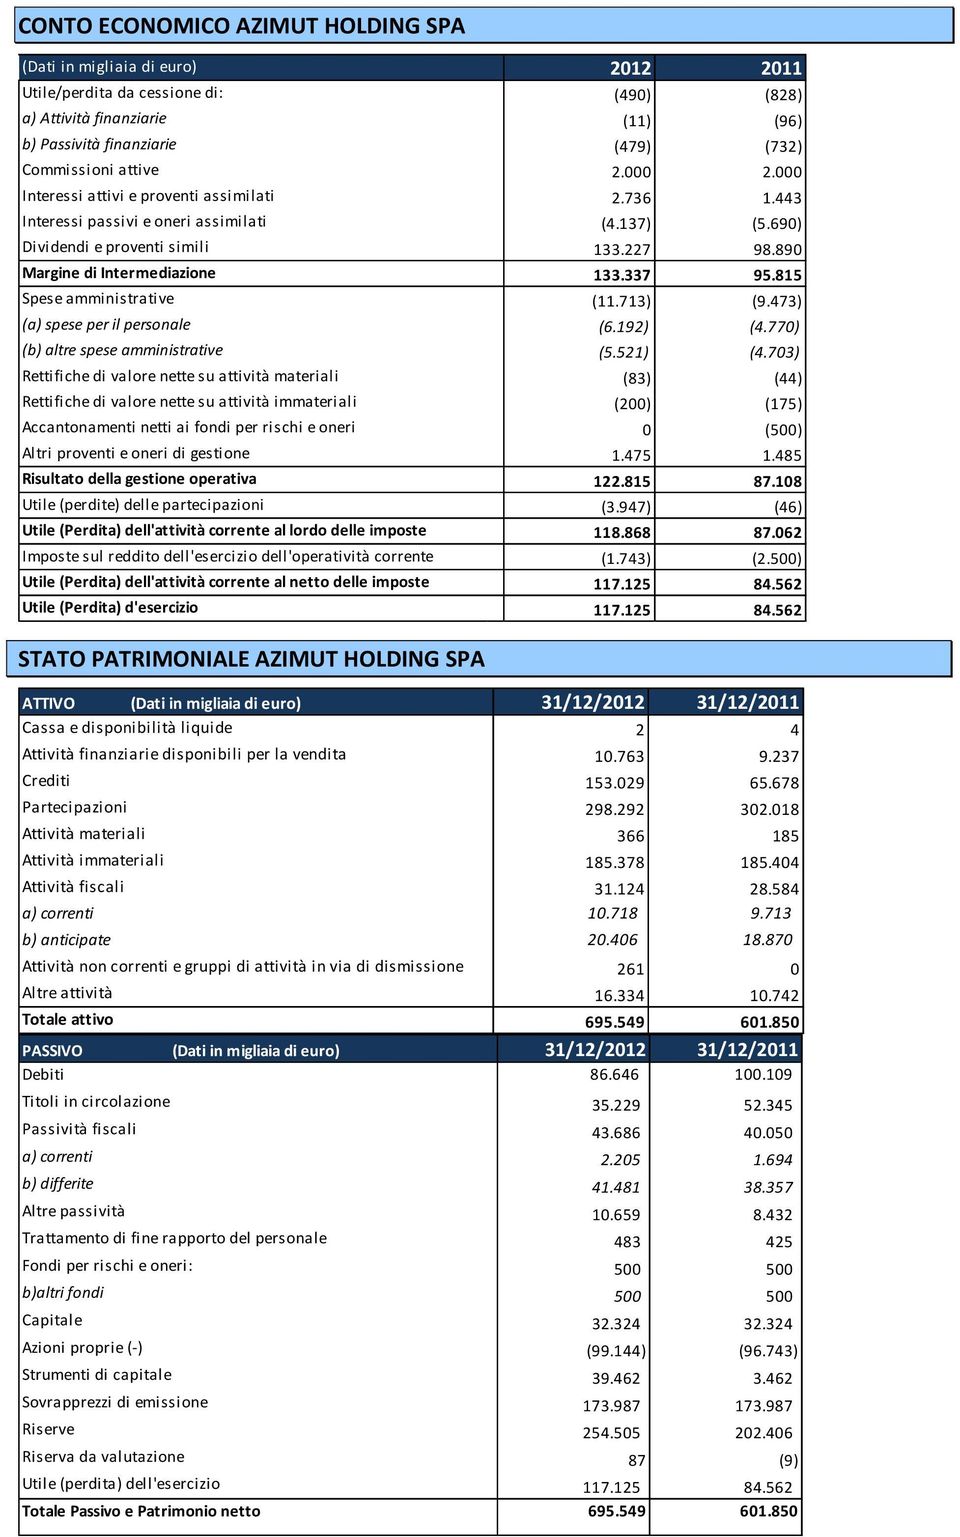 815 Spese amministrative (11.713) (9.473) (a) spese per il personale (6.192) (4.770) (b) altre spese amministrative (5.521) (4.